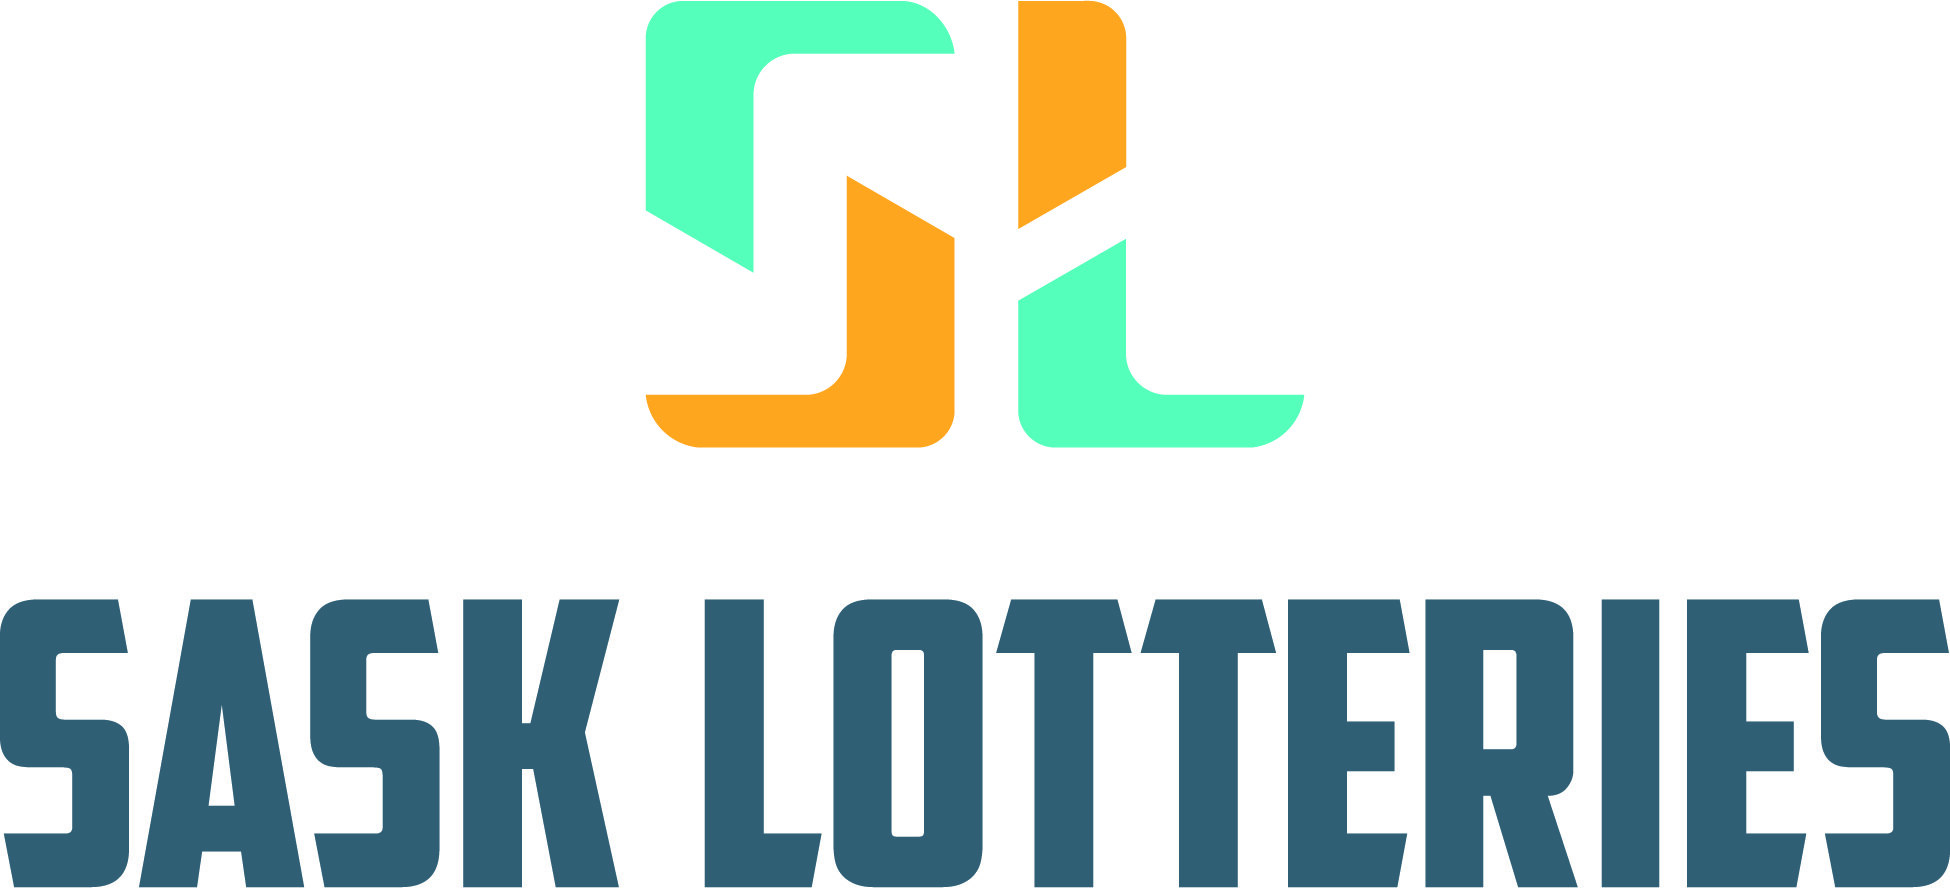 SKLotteries logo col.jpg